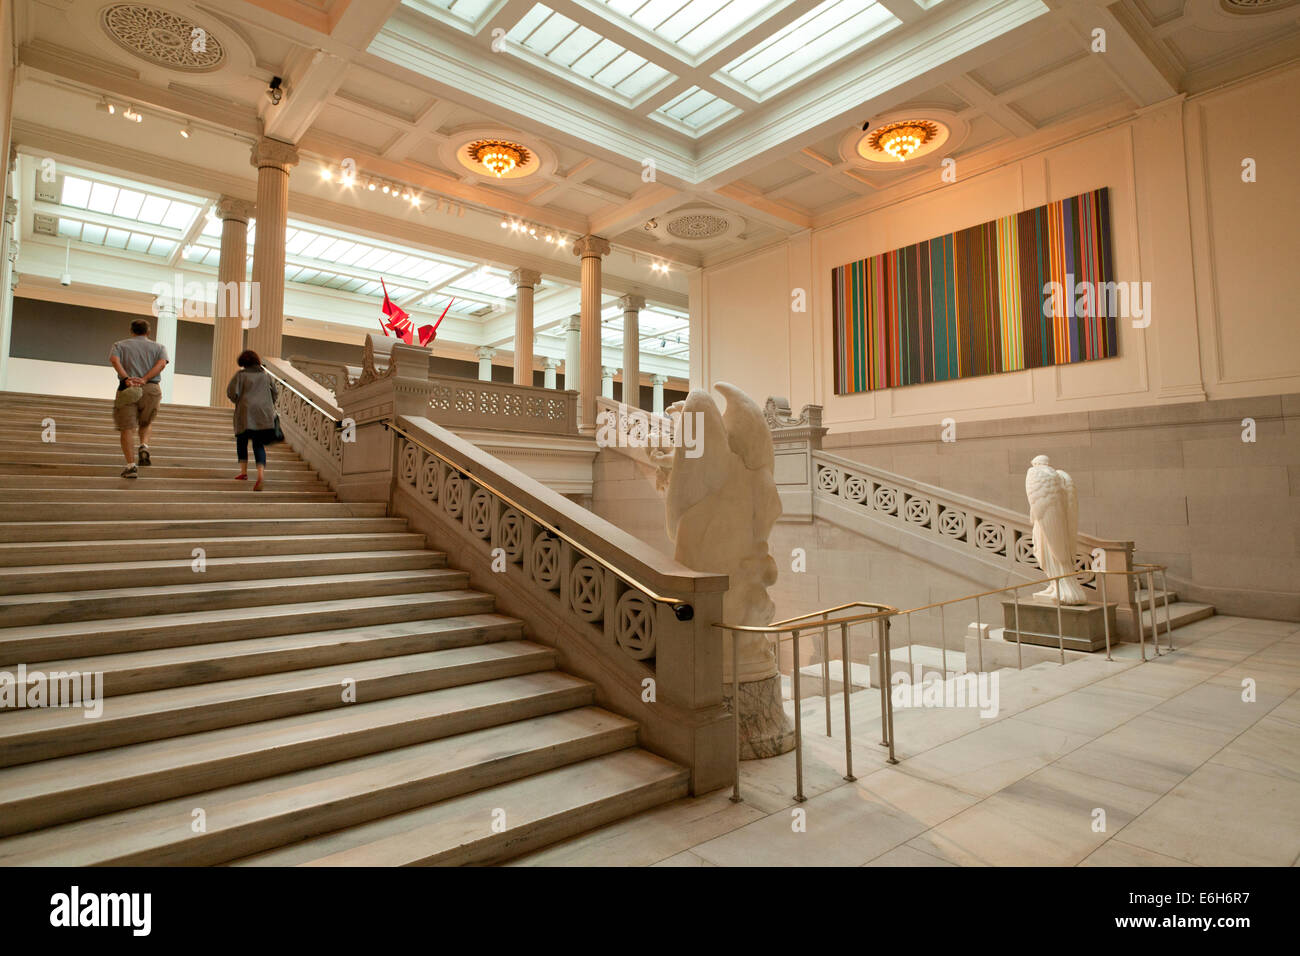 Corcoran School of Art museum interior, Washington, DC USA Stock Photo